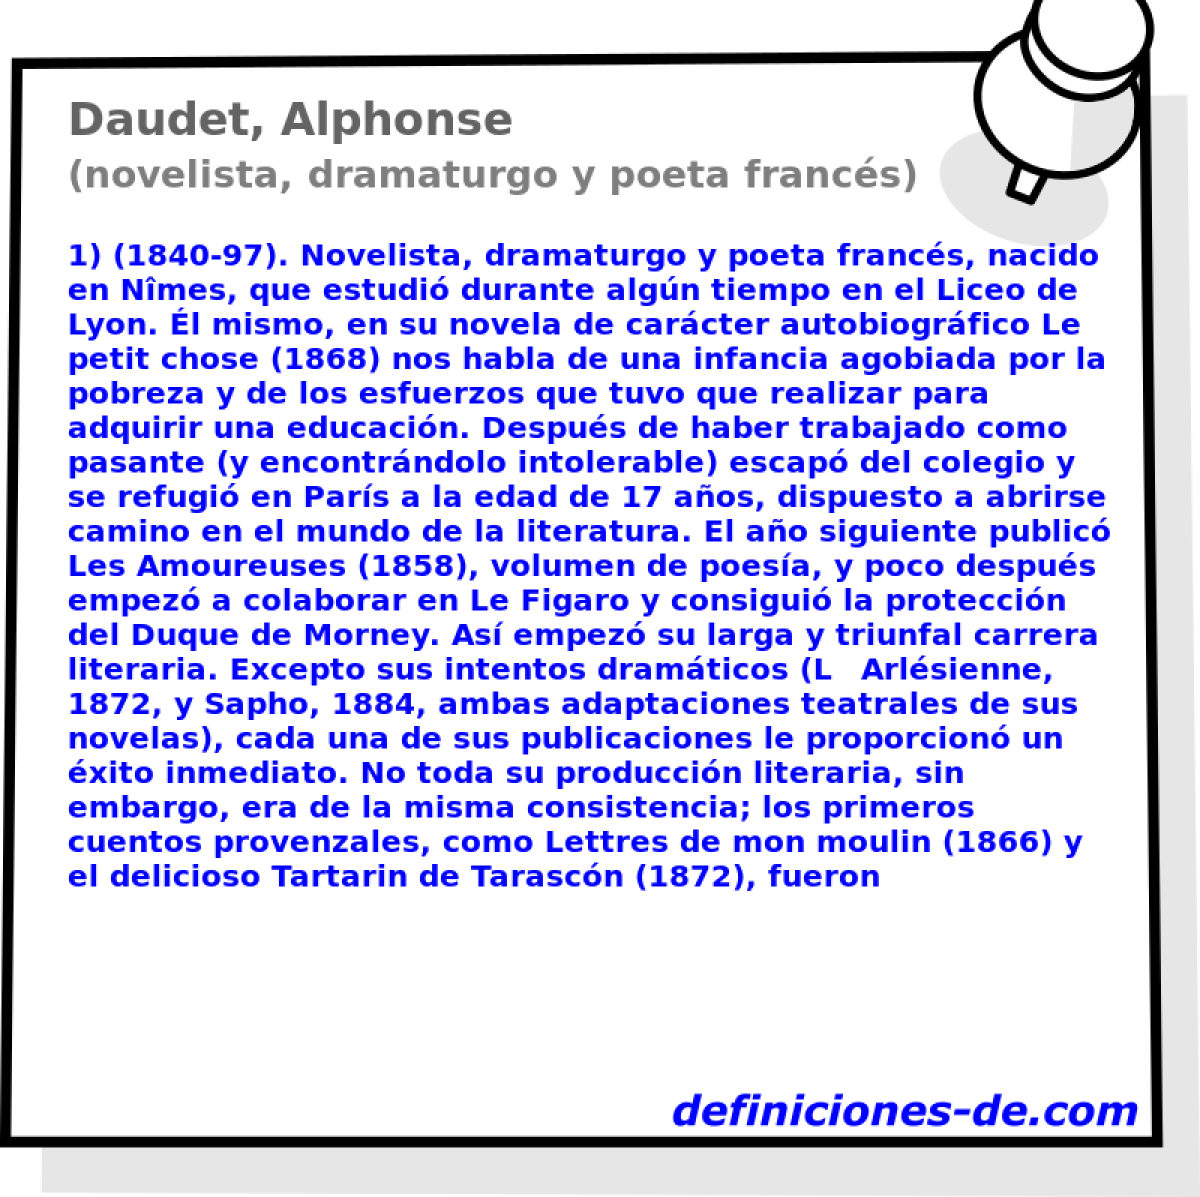 Daudet, Alphonse (novelista, dramaturgo y poeta francs)